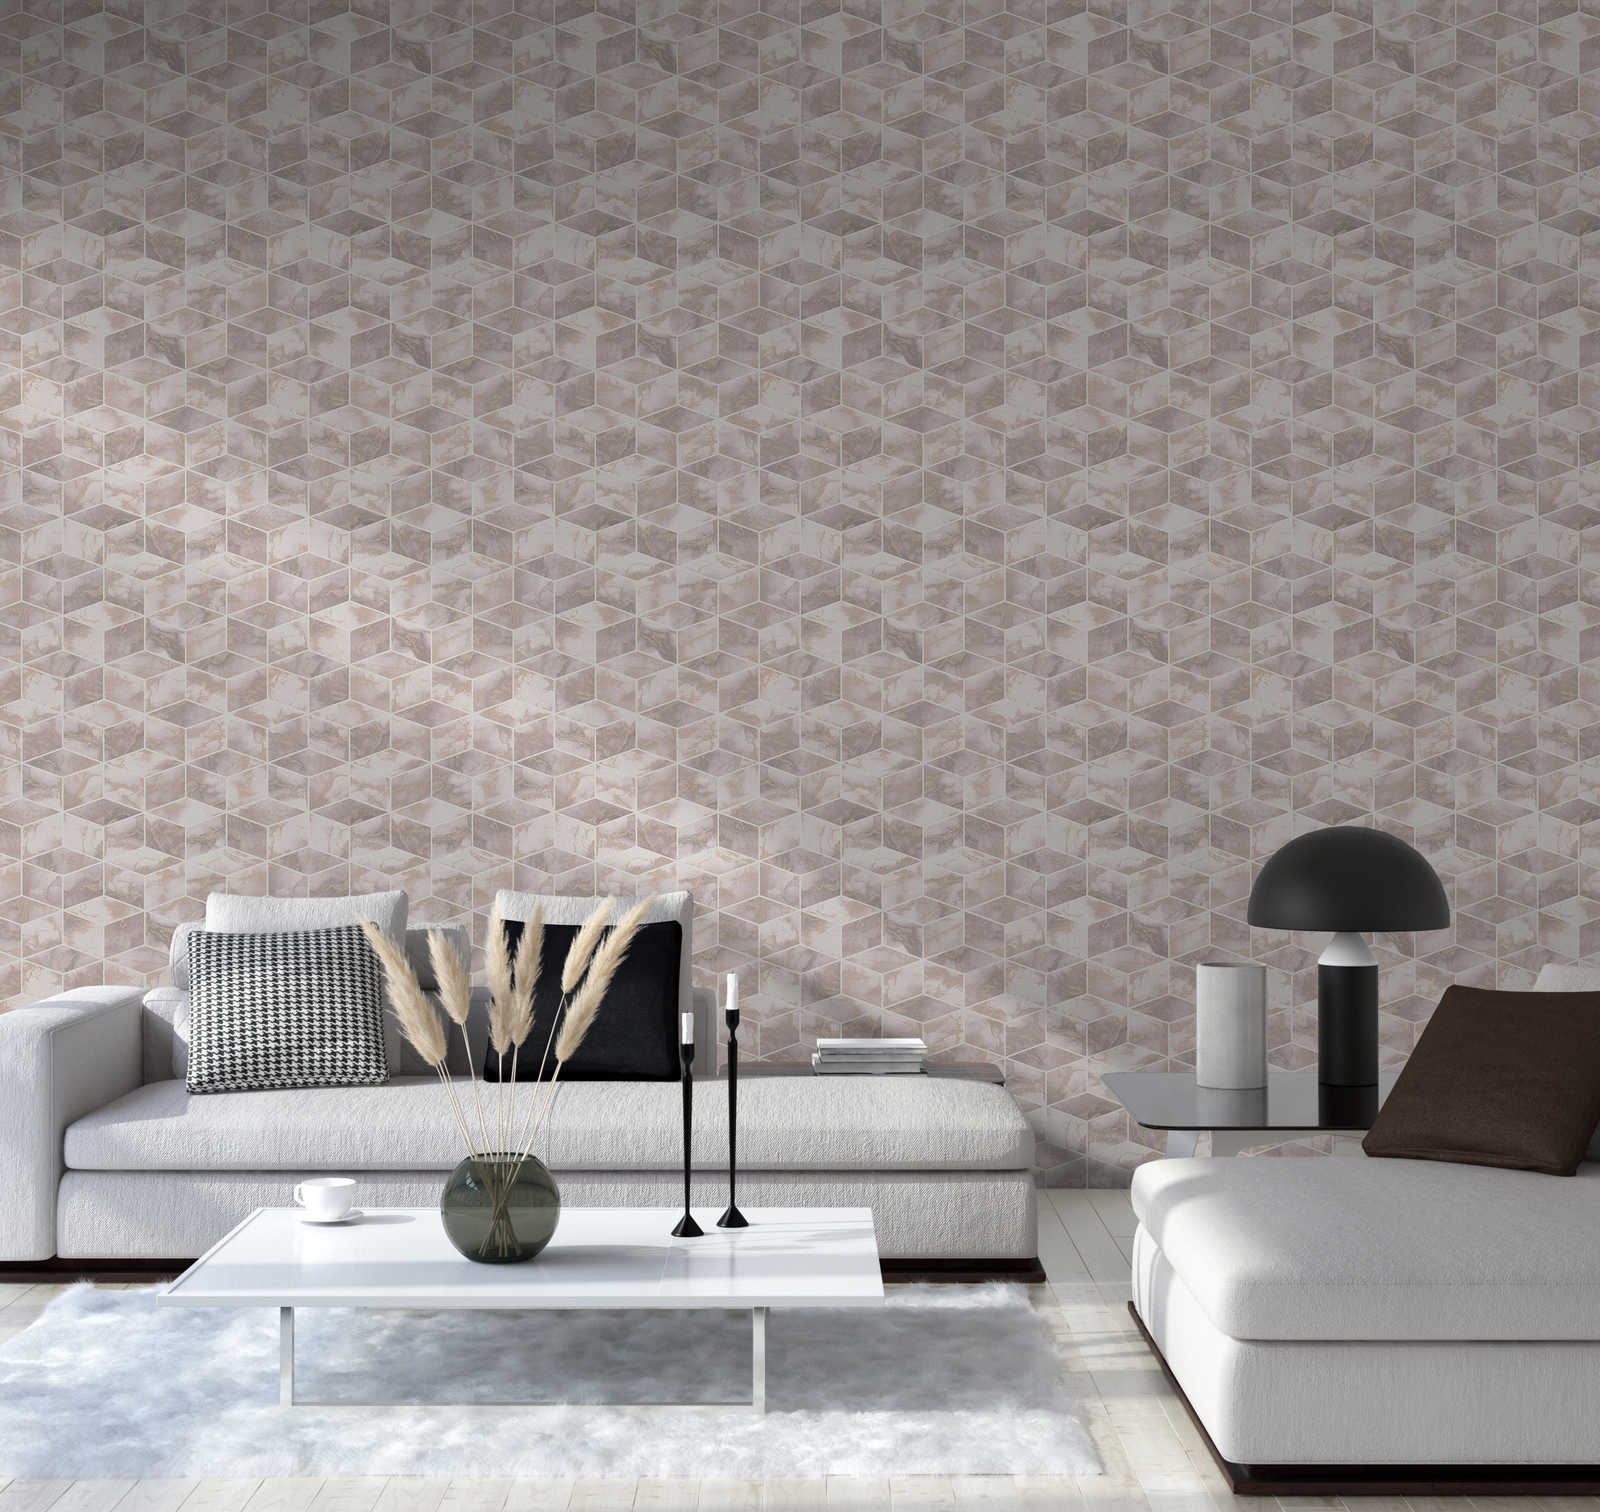             Tile wallpaper with marble & metallic effect - metallic, pink, white
        